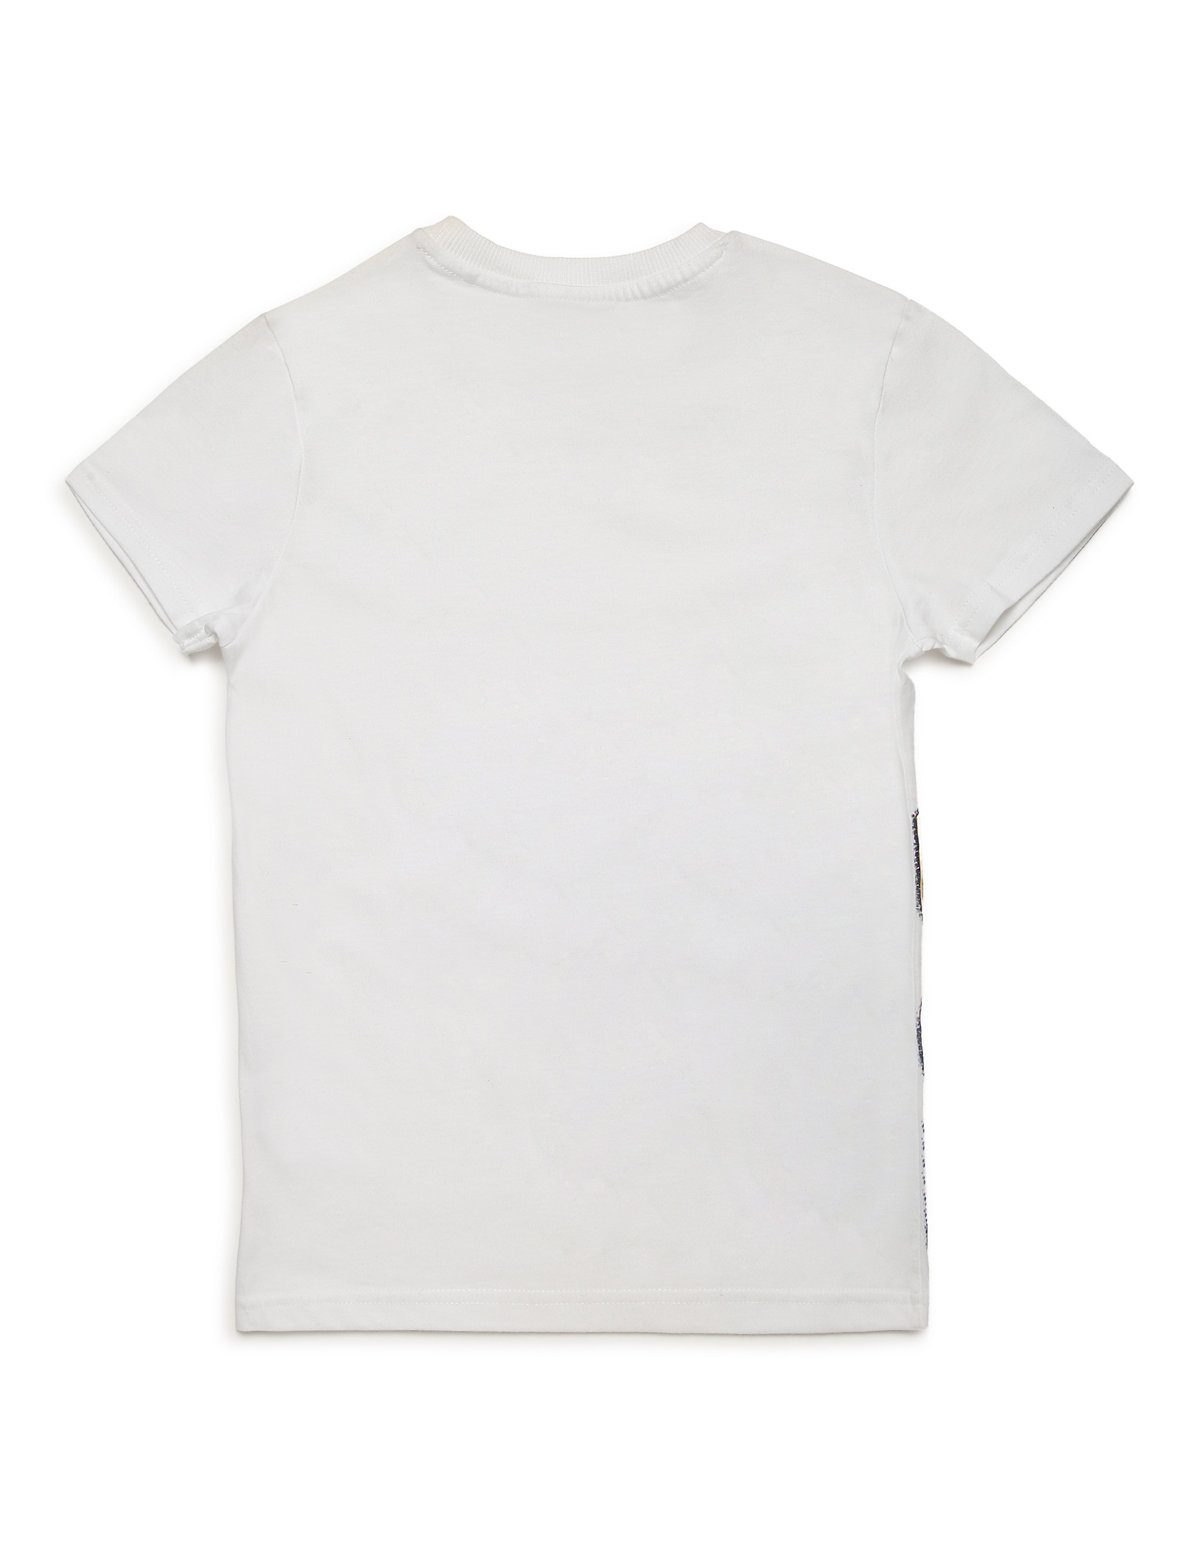 Pure Cotton Printed Round Neck T-Shirt